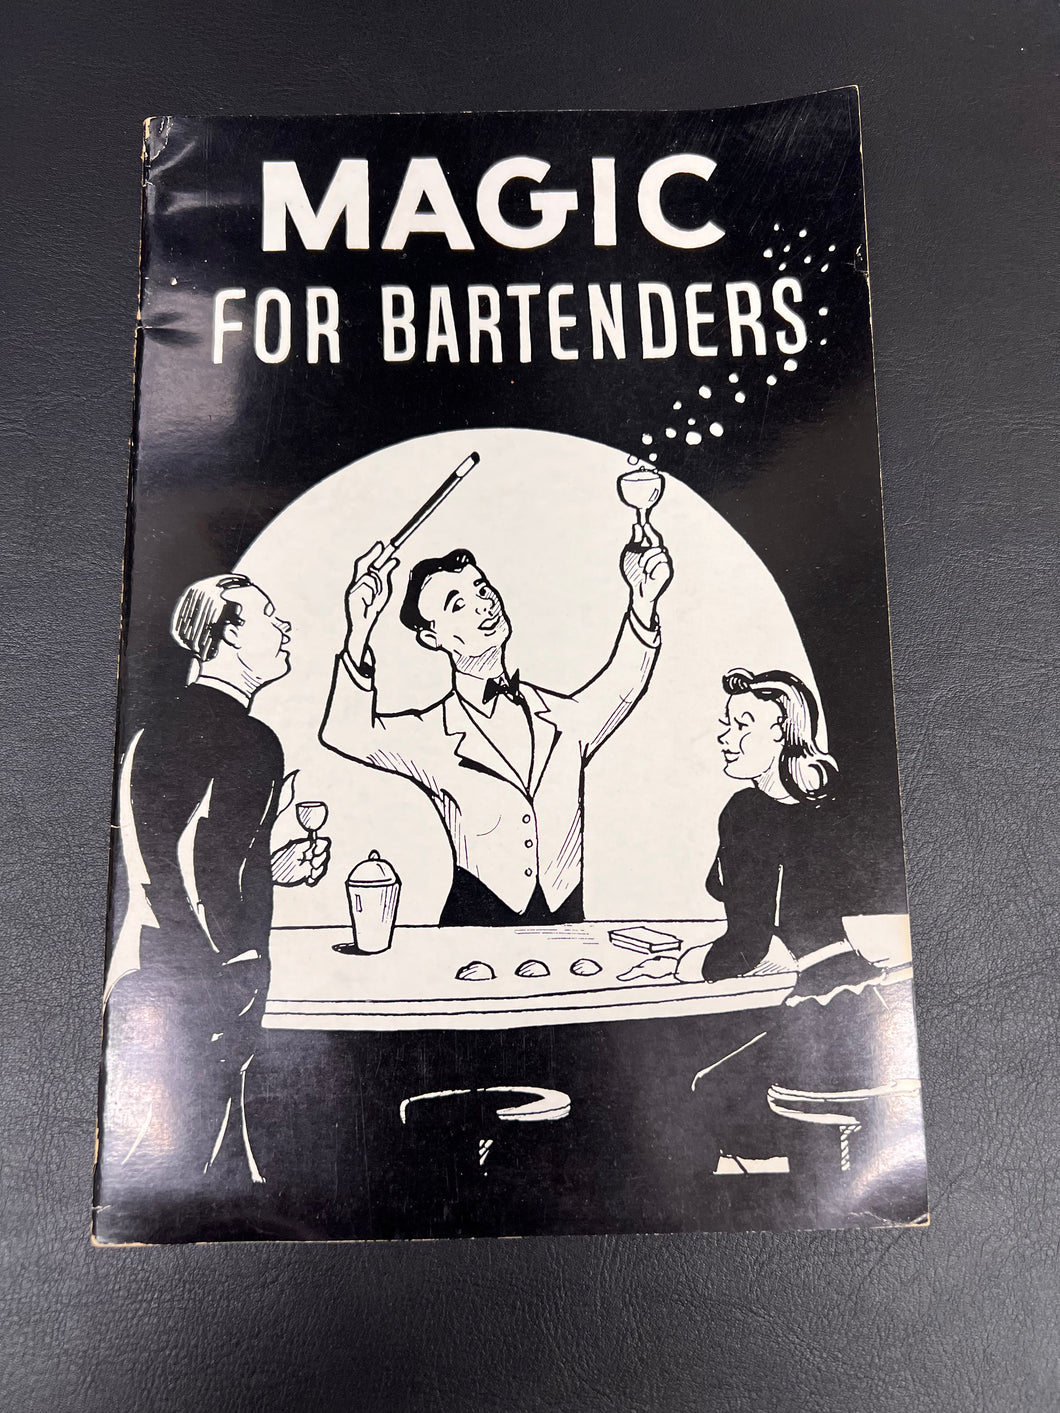 Magic For Bartenders by Senor Mardo